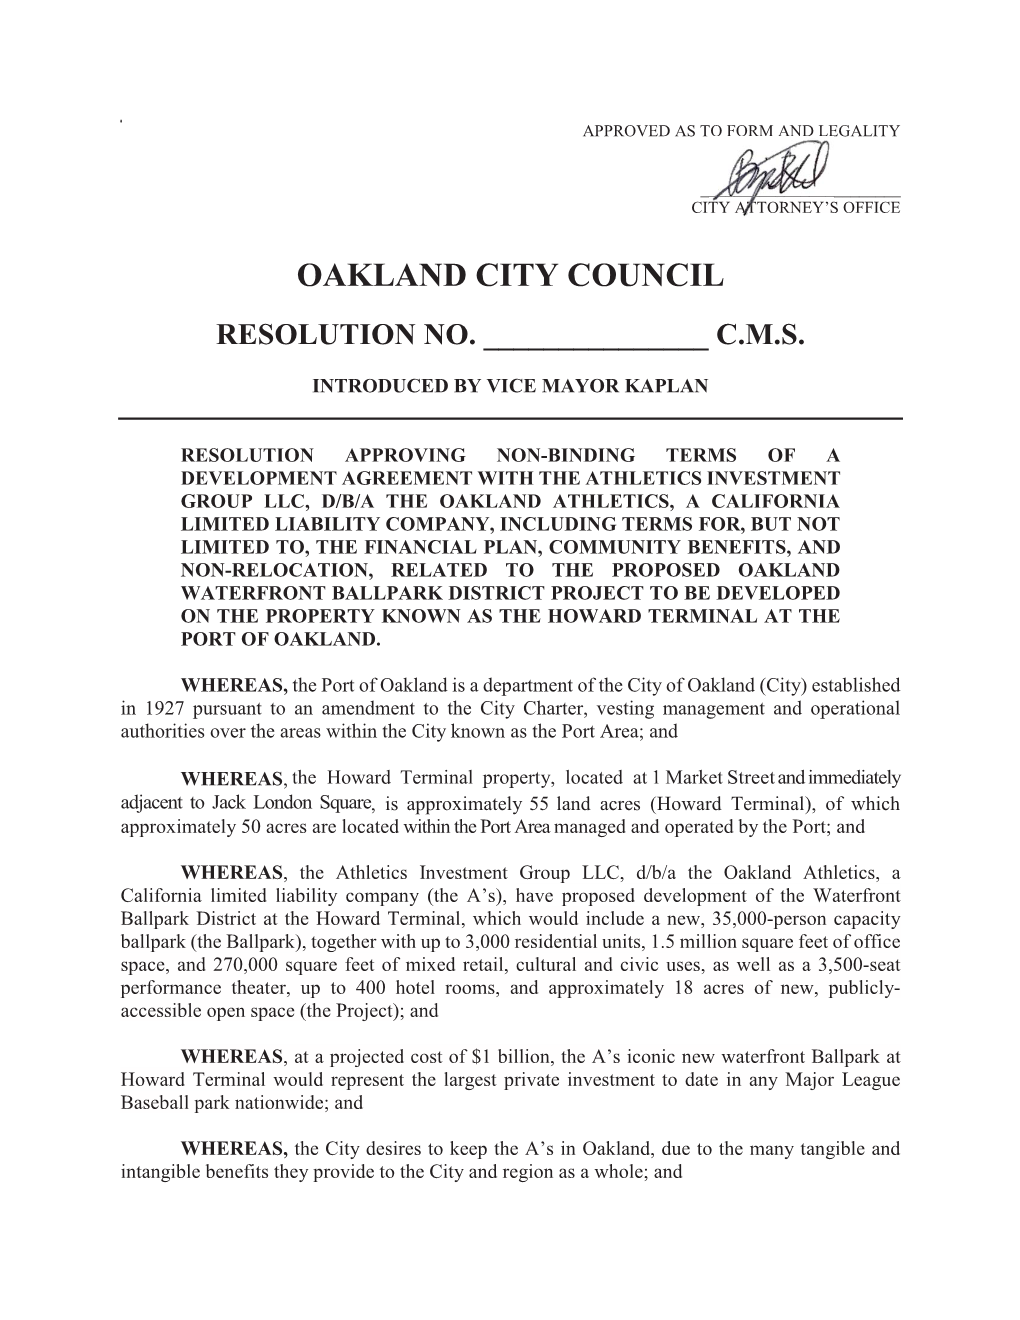 Oakland City Council Resolution No